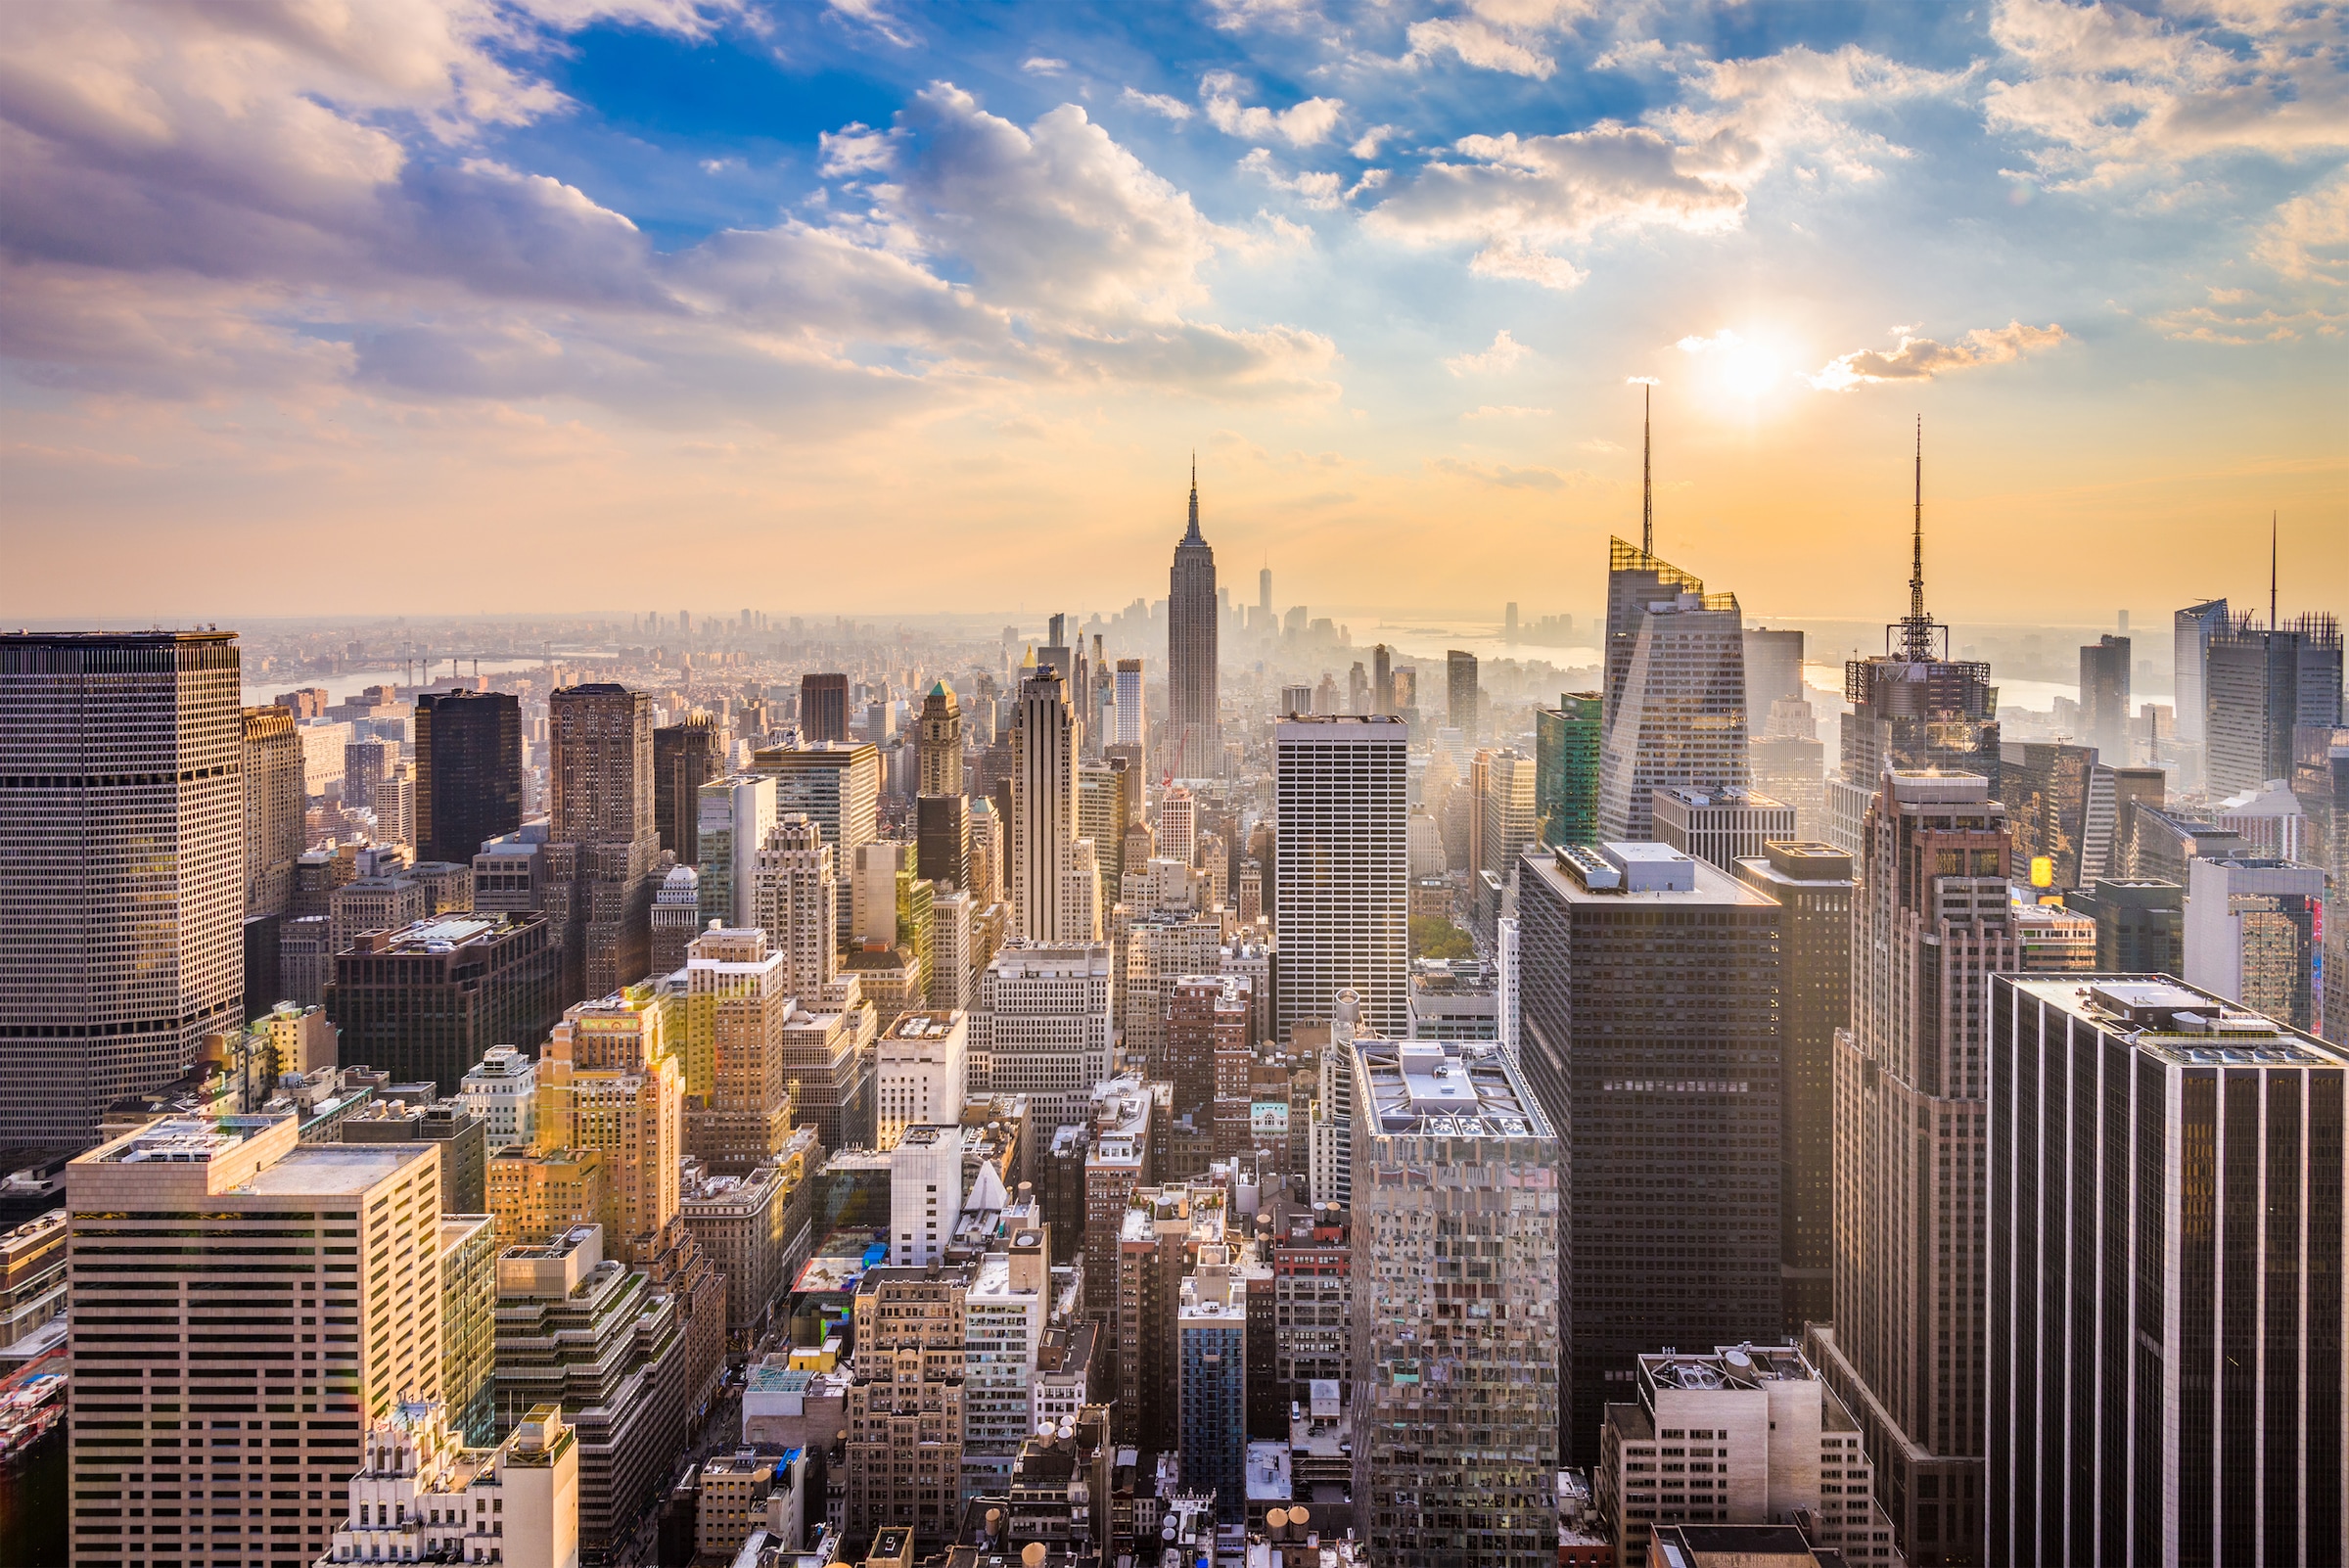 Papermoon Fototapete "Manhattan Skyline"